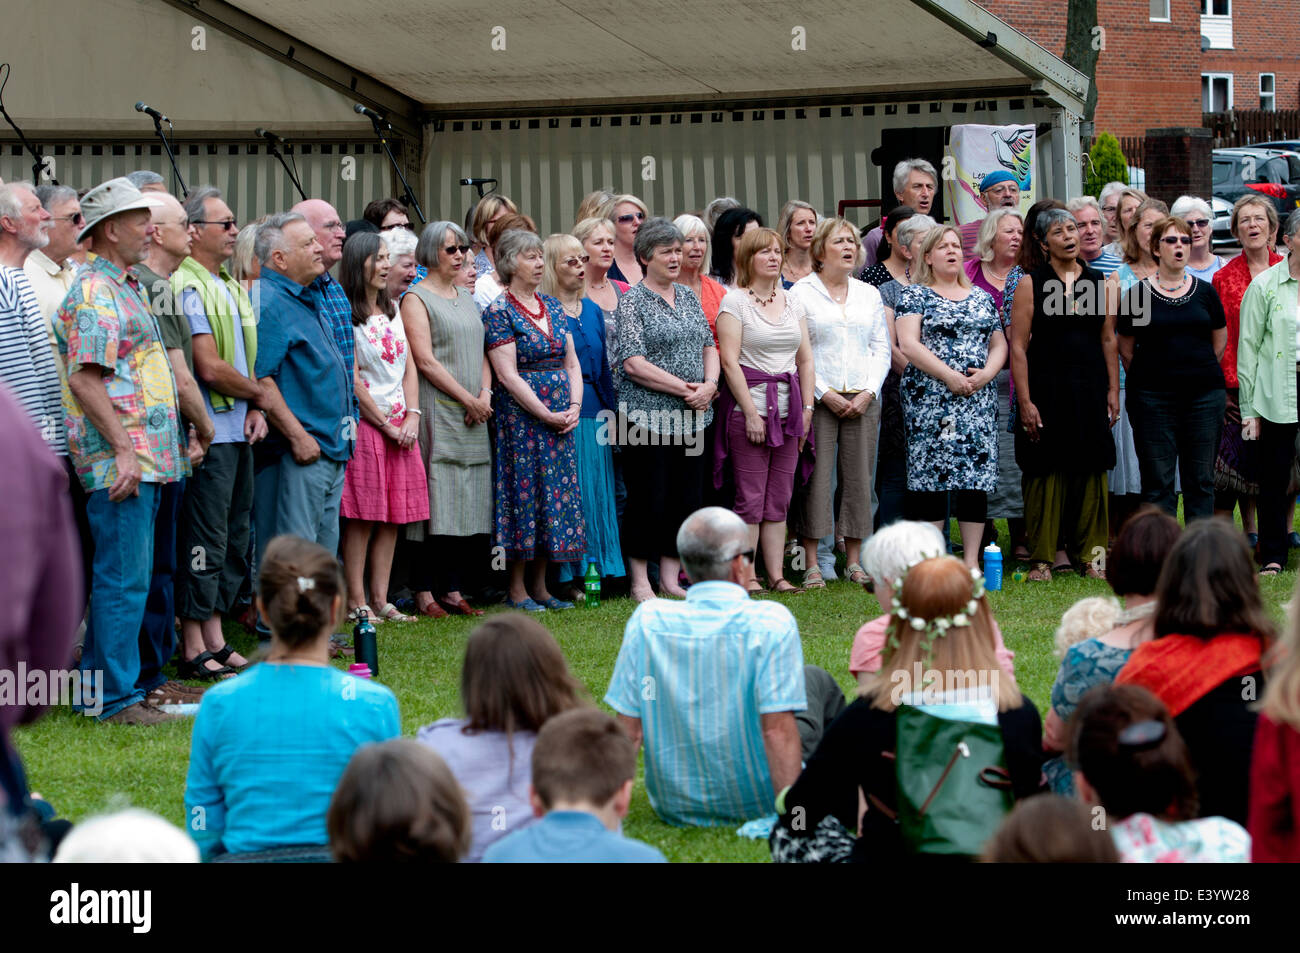 A community choir singing at Leamington Peace Festival, UK Stock Photo